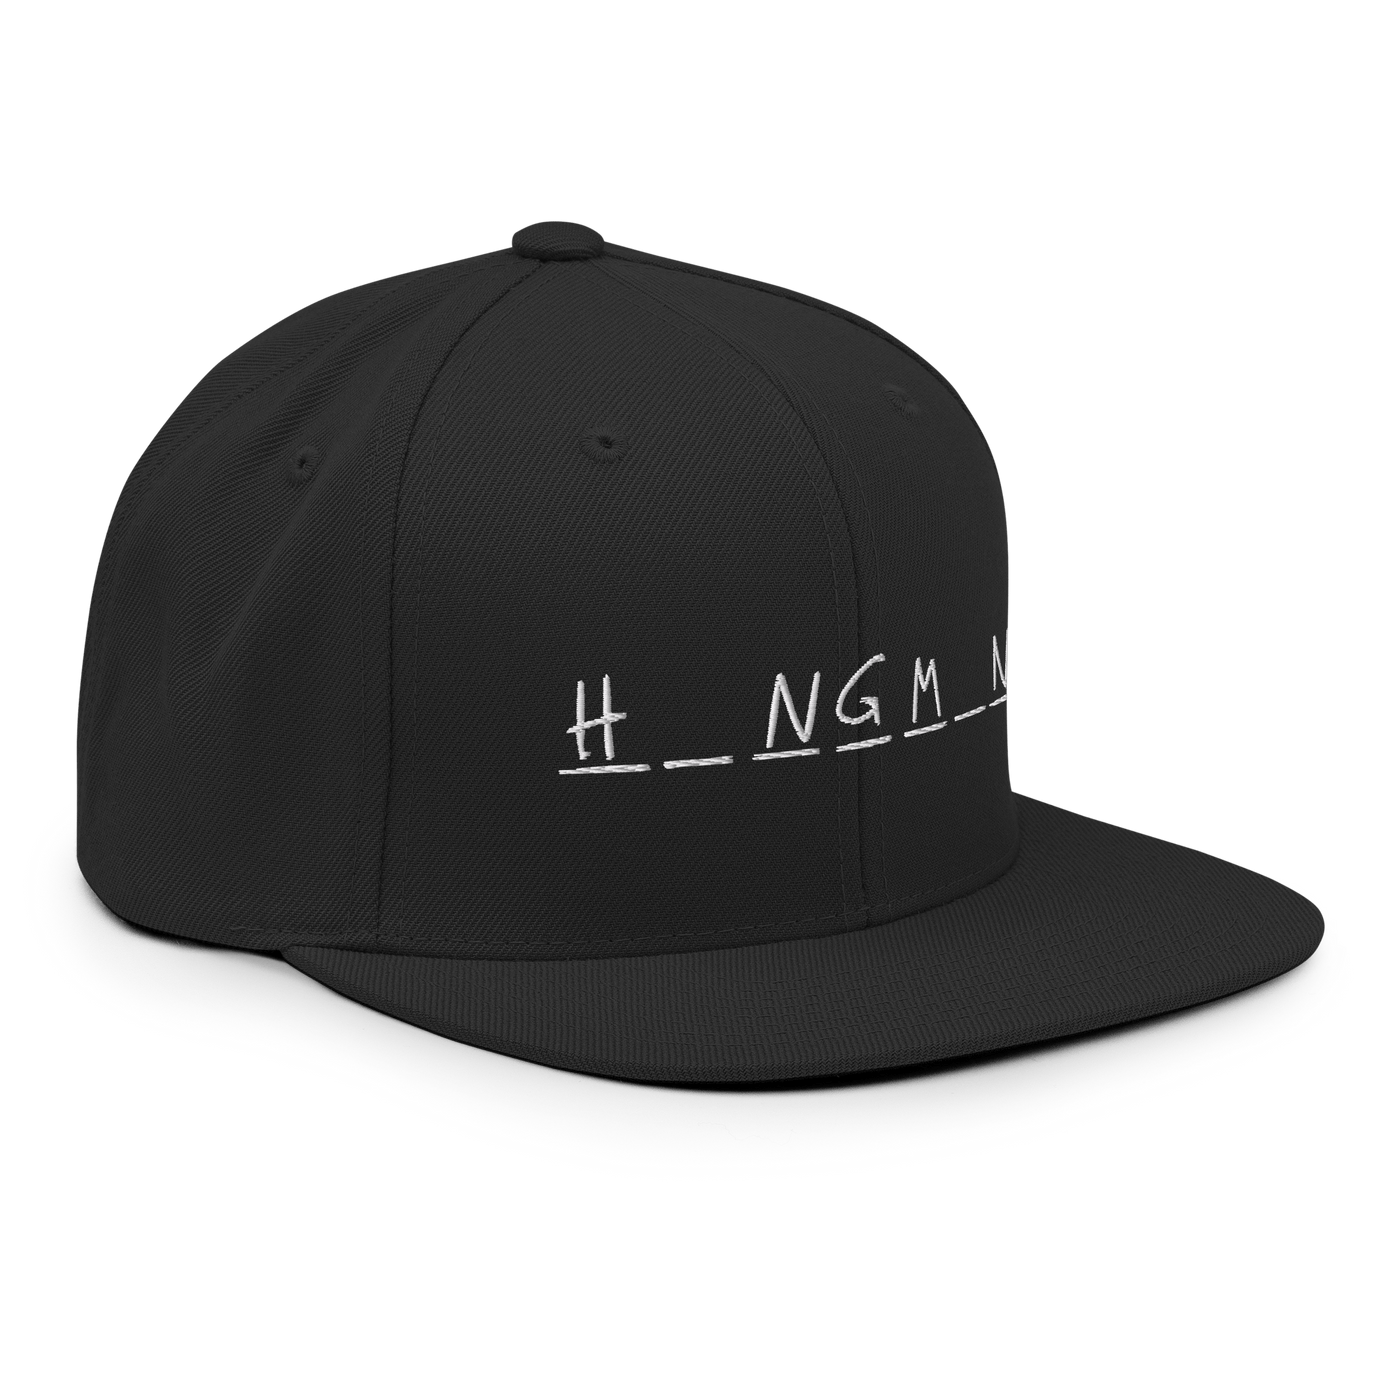 Hangman Snapback - Black - - Just Another Cap Store